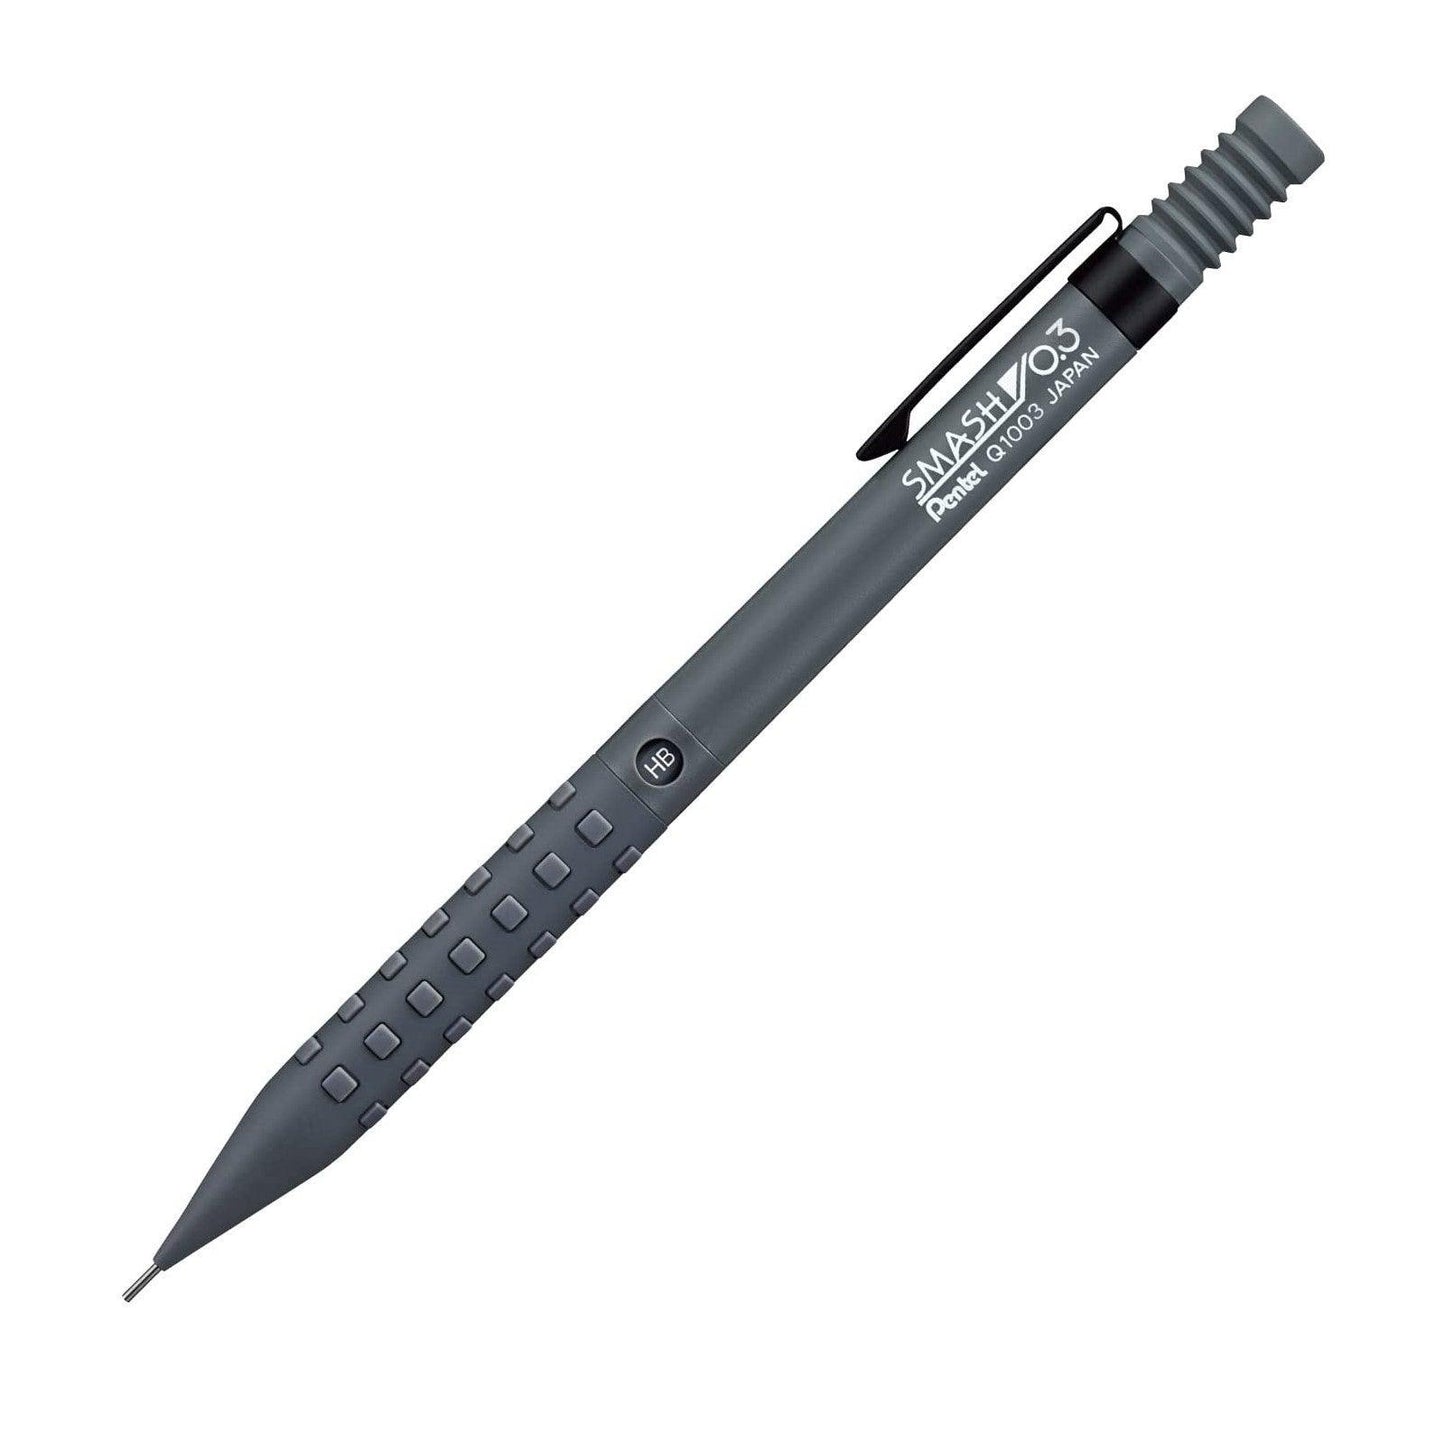 DMP - Dave's Mechanical Pencils: Pentel Hi-Polymer ZES-08 Eraser Review